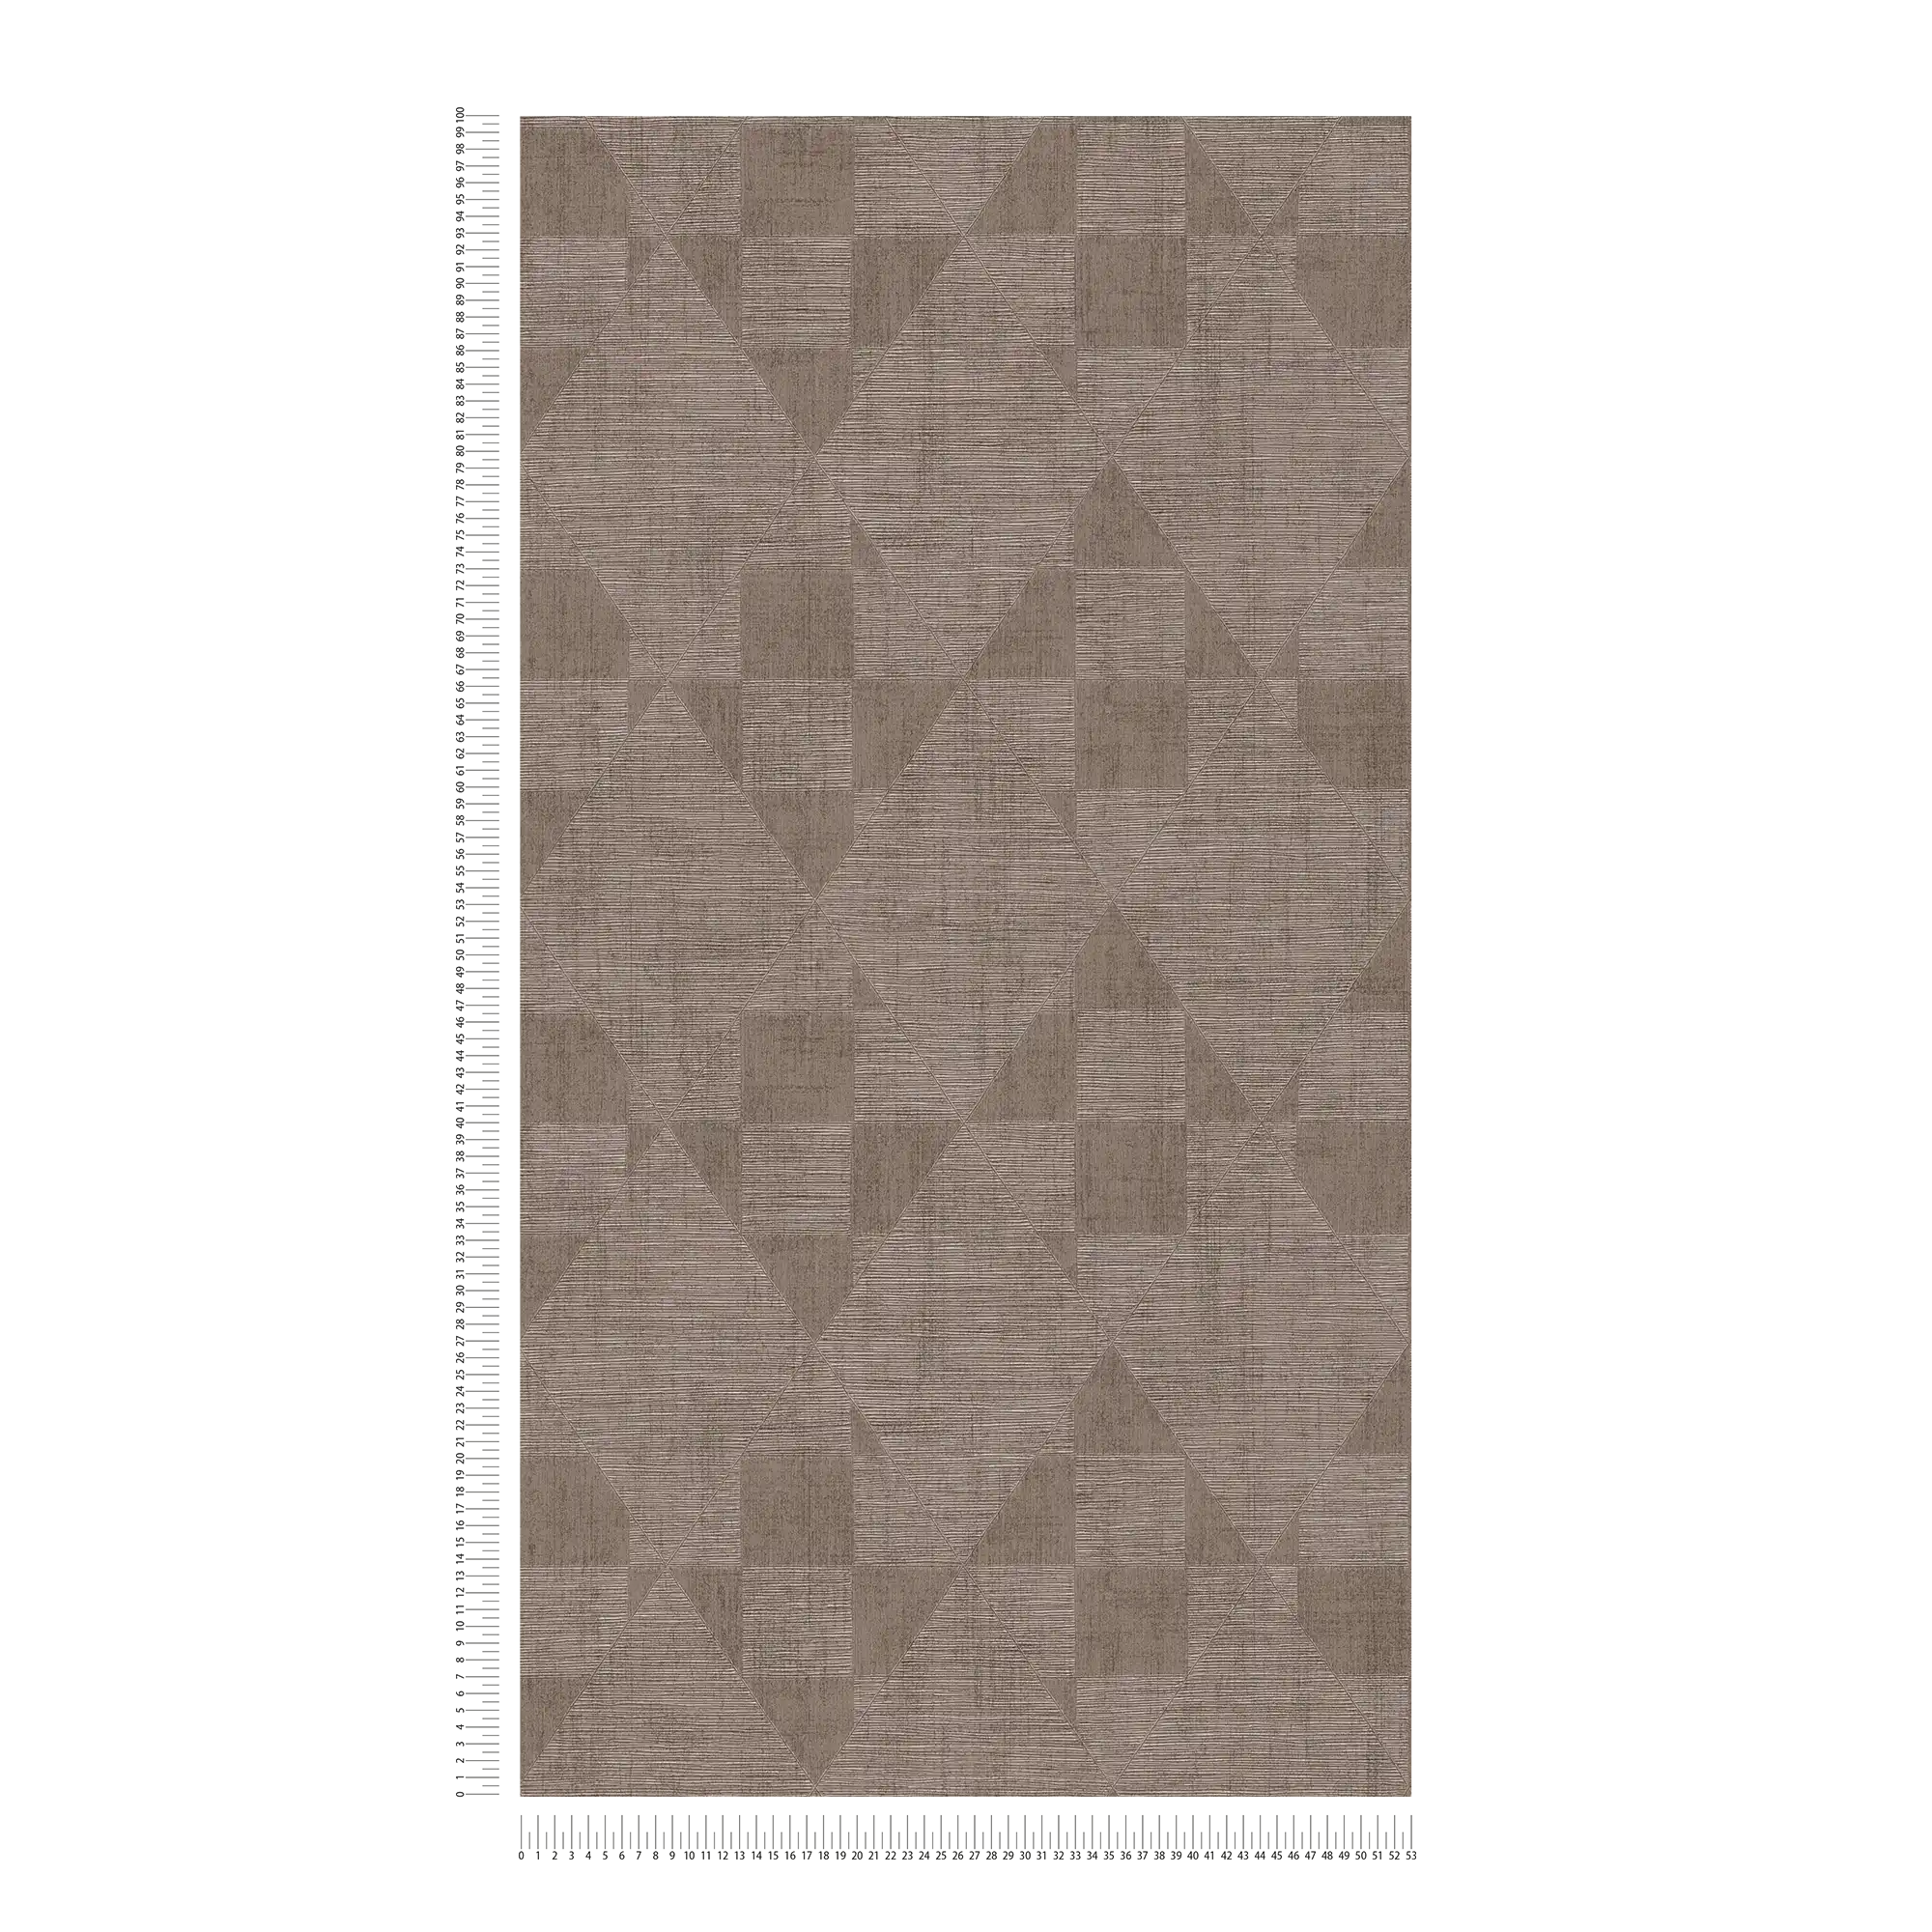             Melange behang donkerbruin met retro patroon - bruin
        